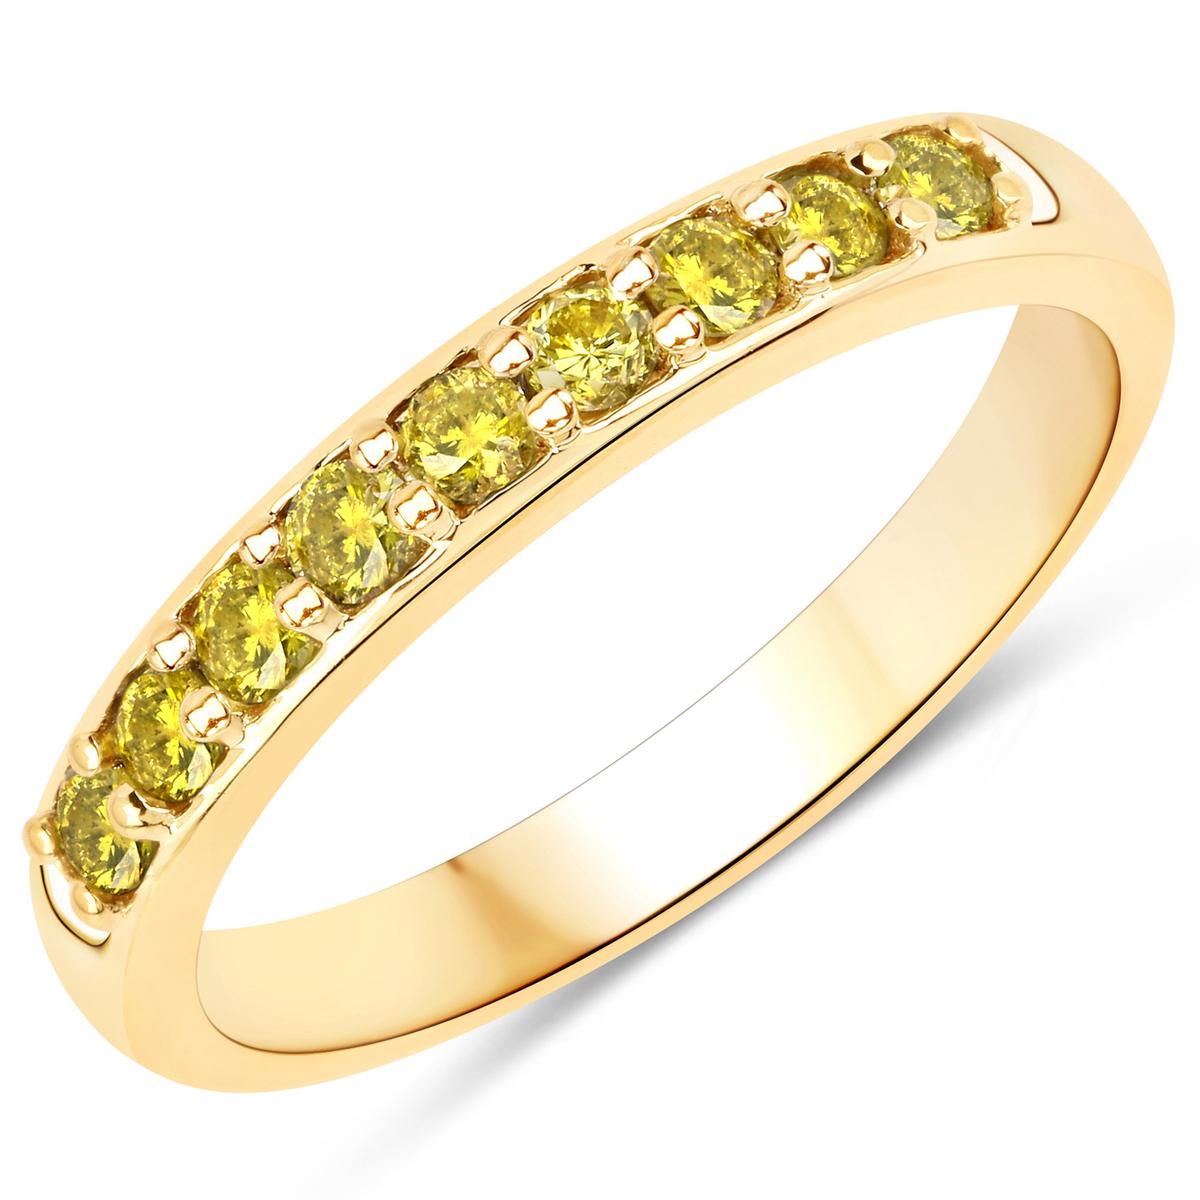 14KT Yellow Gold 0.35ctw Yellow Diamond Ring